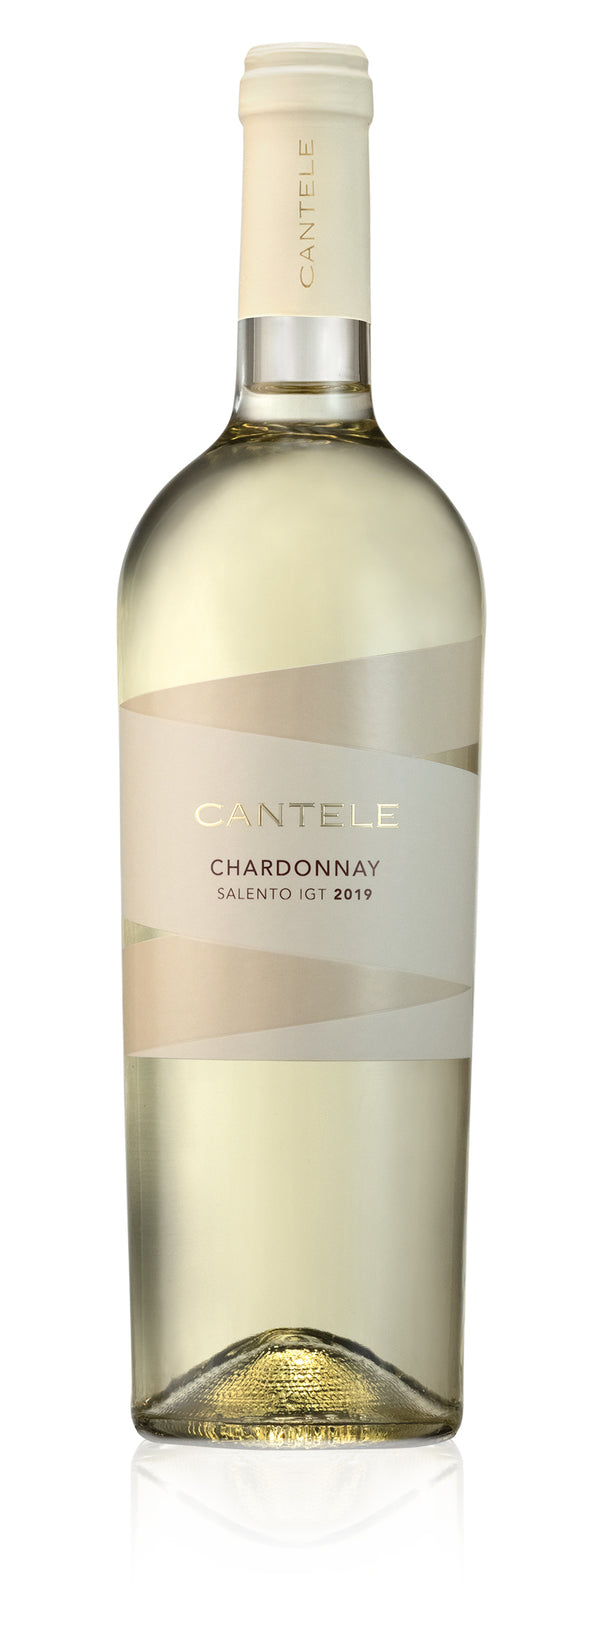 Cantele Chardonnay, IGT Salento